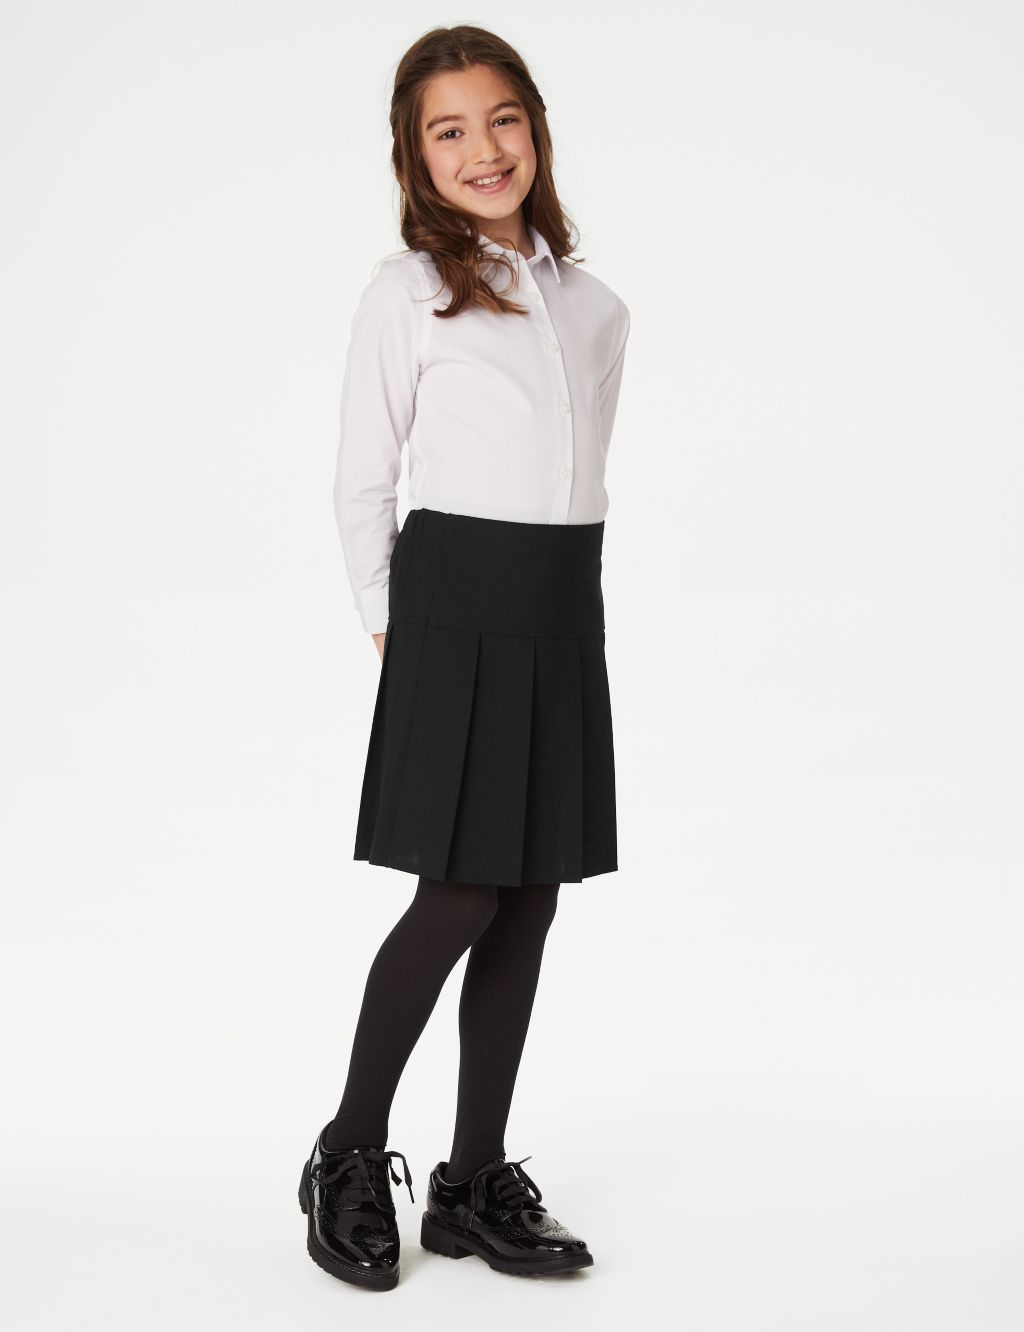 2pk Girls' Crease Resistant School Skirts (2-16 Yrs) 1 of 5